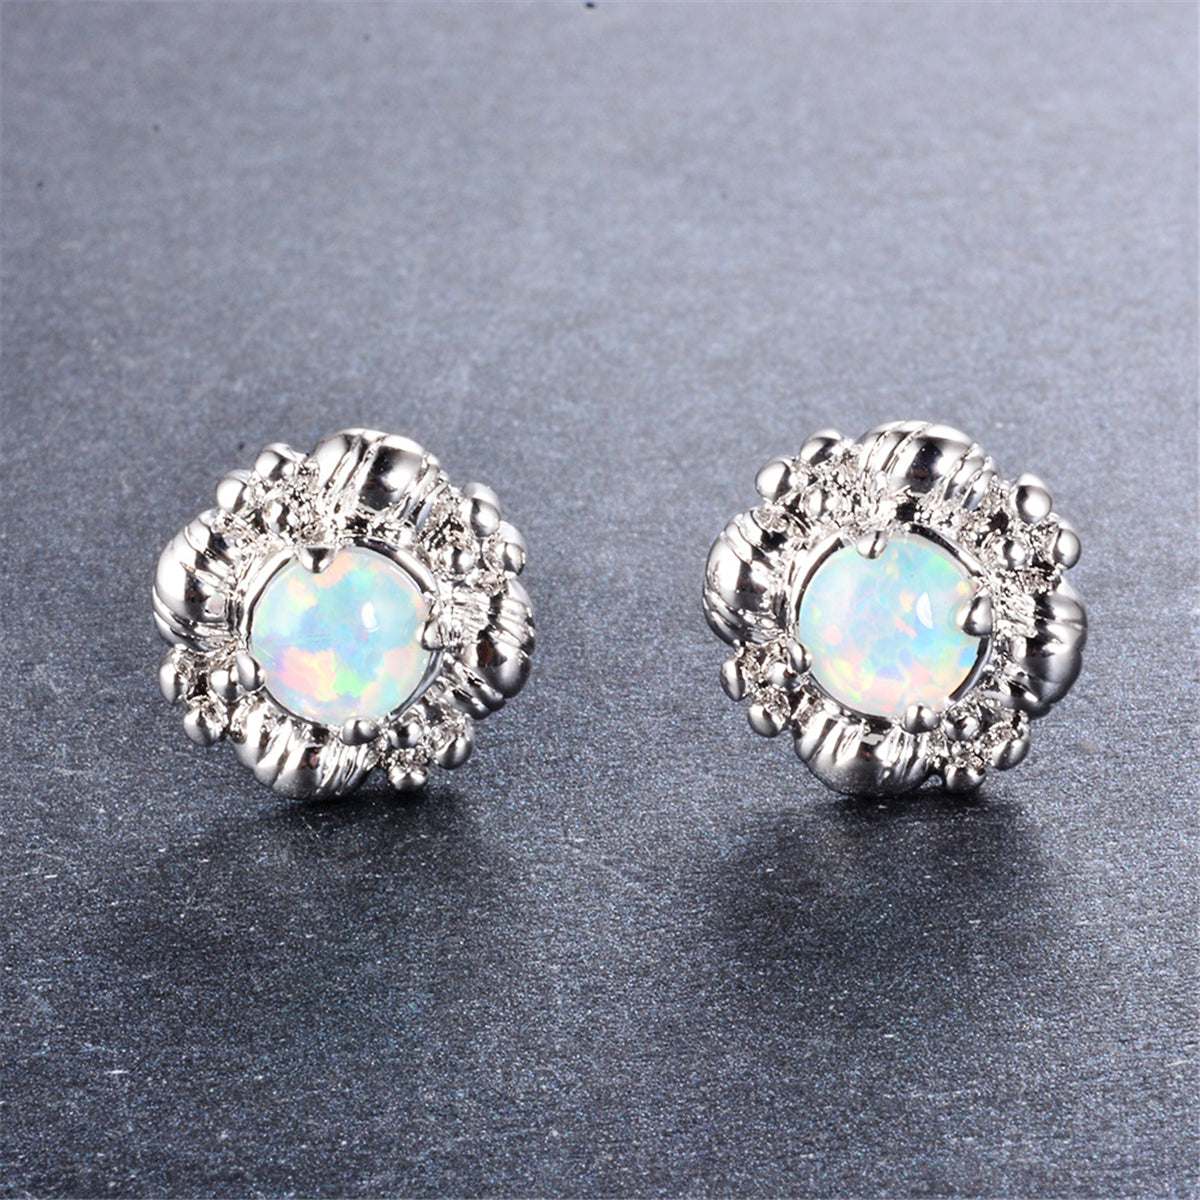 White Opal & Silver-Plated Botany Stud Earrings